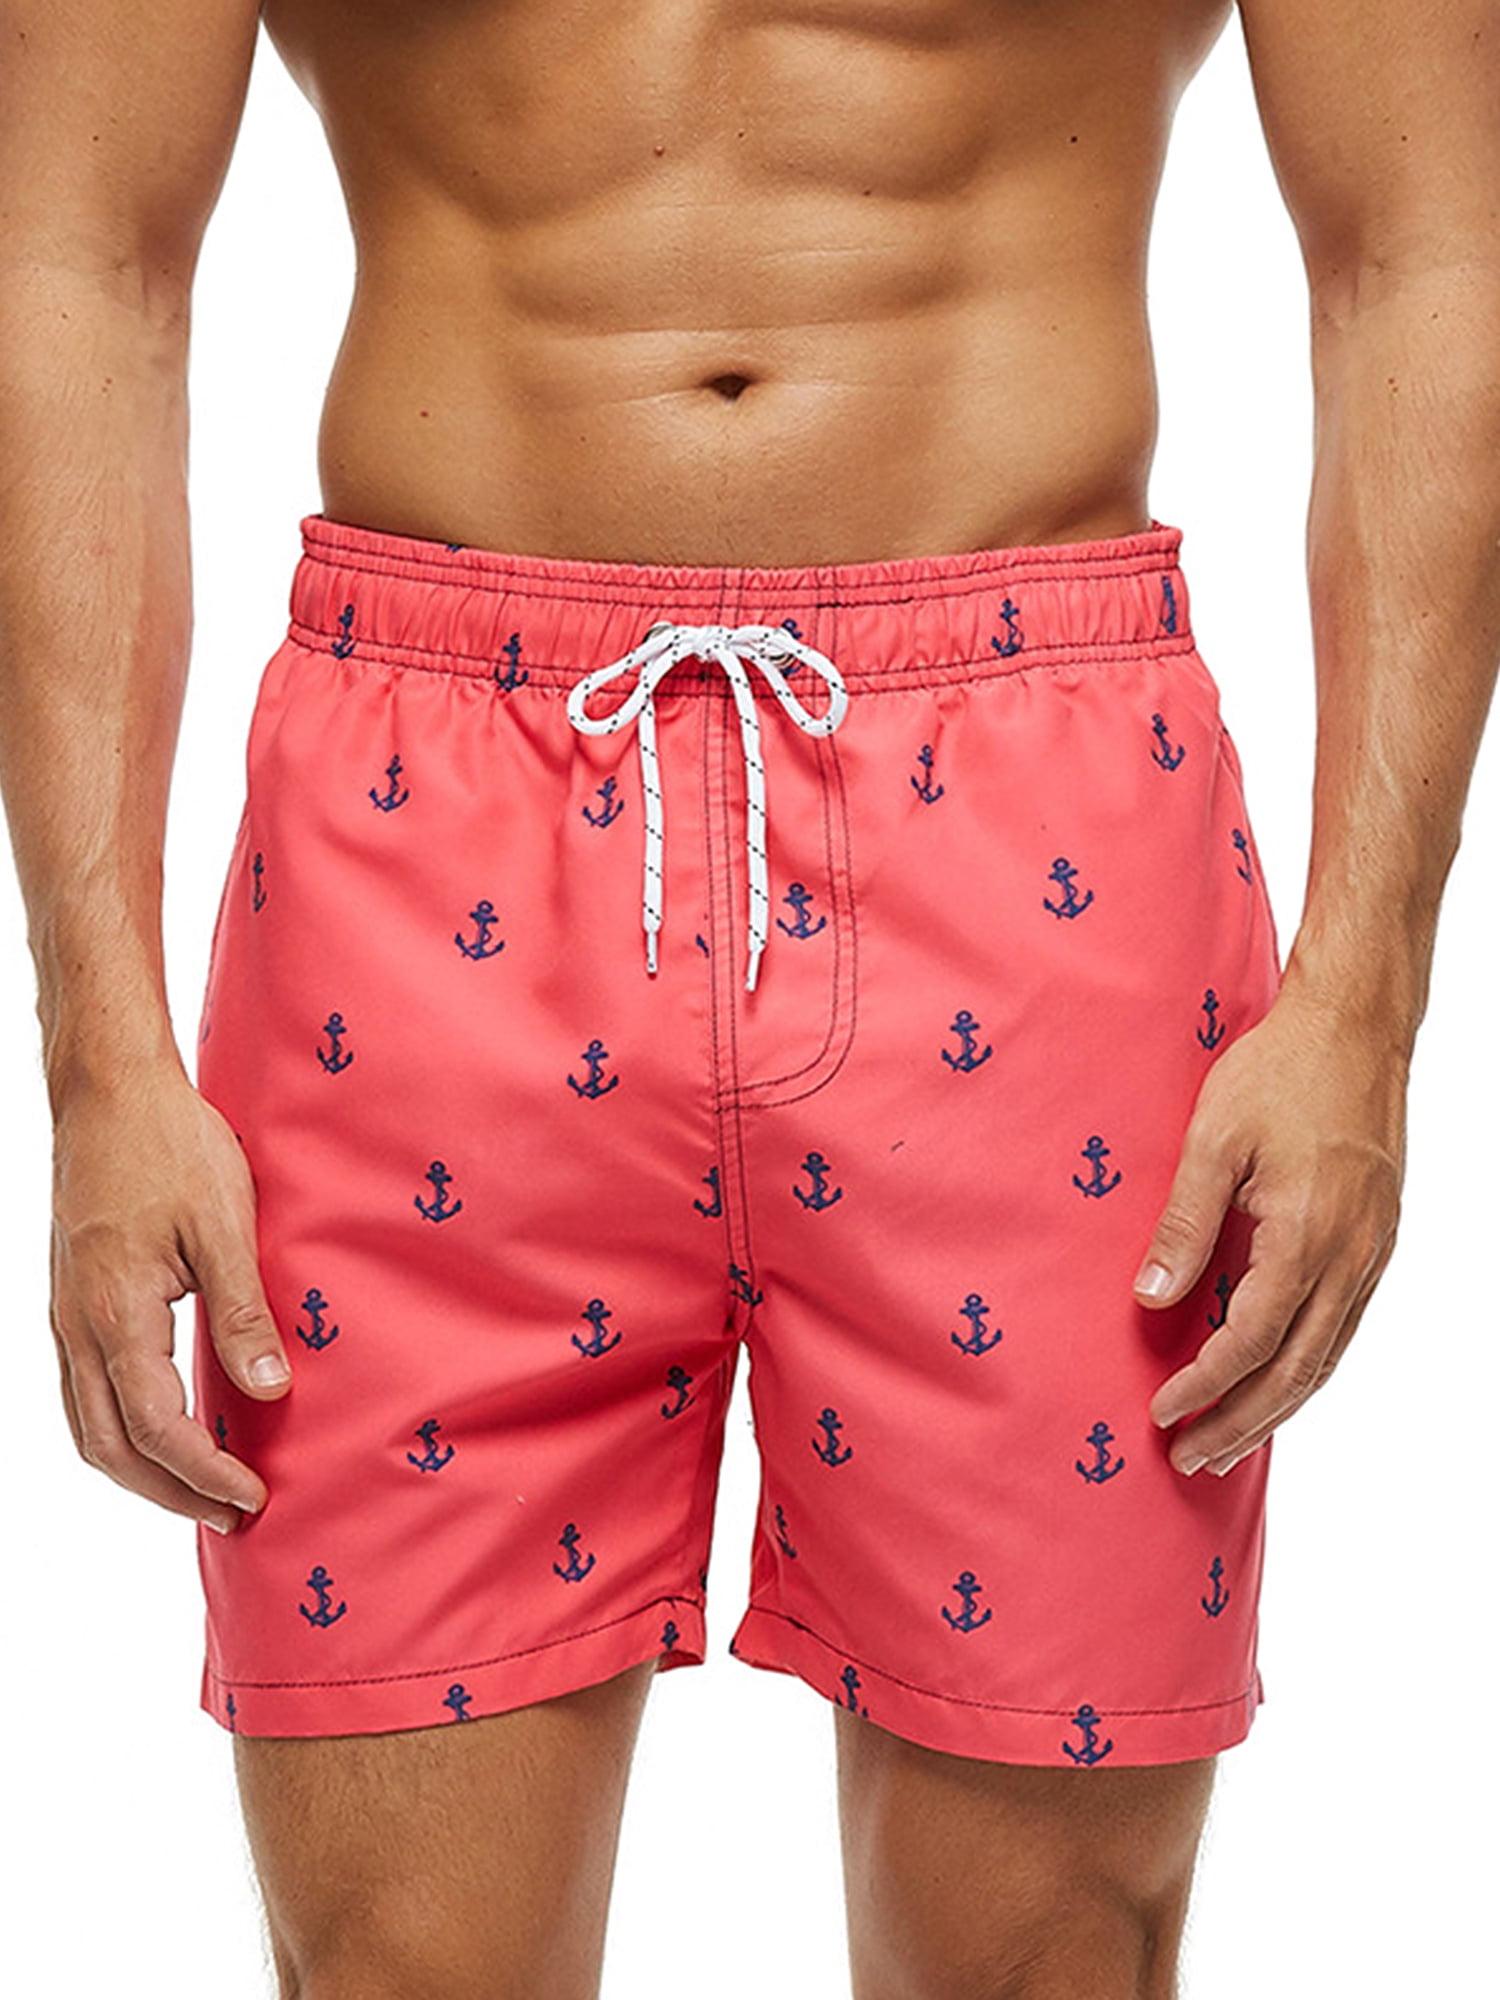 Boys Casual Swim Trunks Quick Dry Beach Board Shorts Swimwear Pants with Pocket